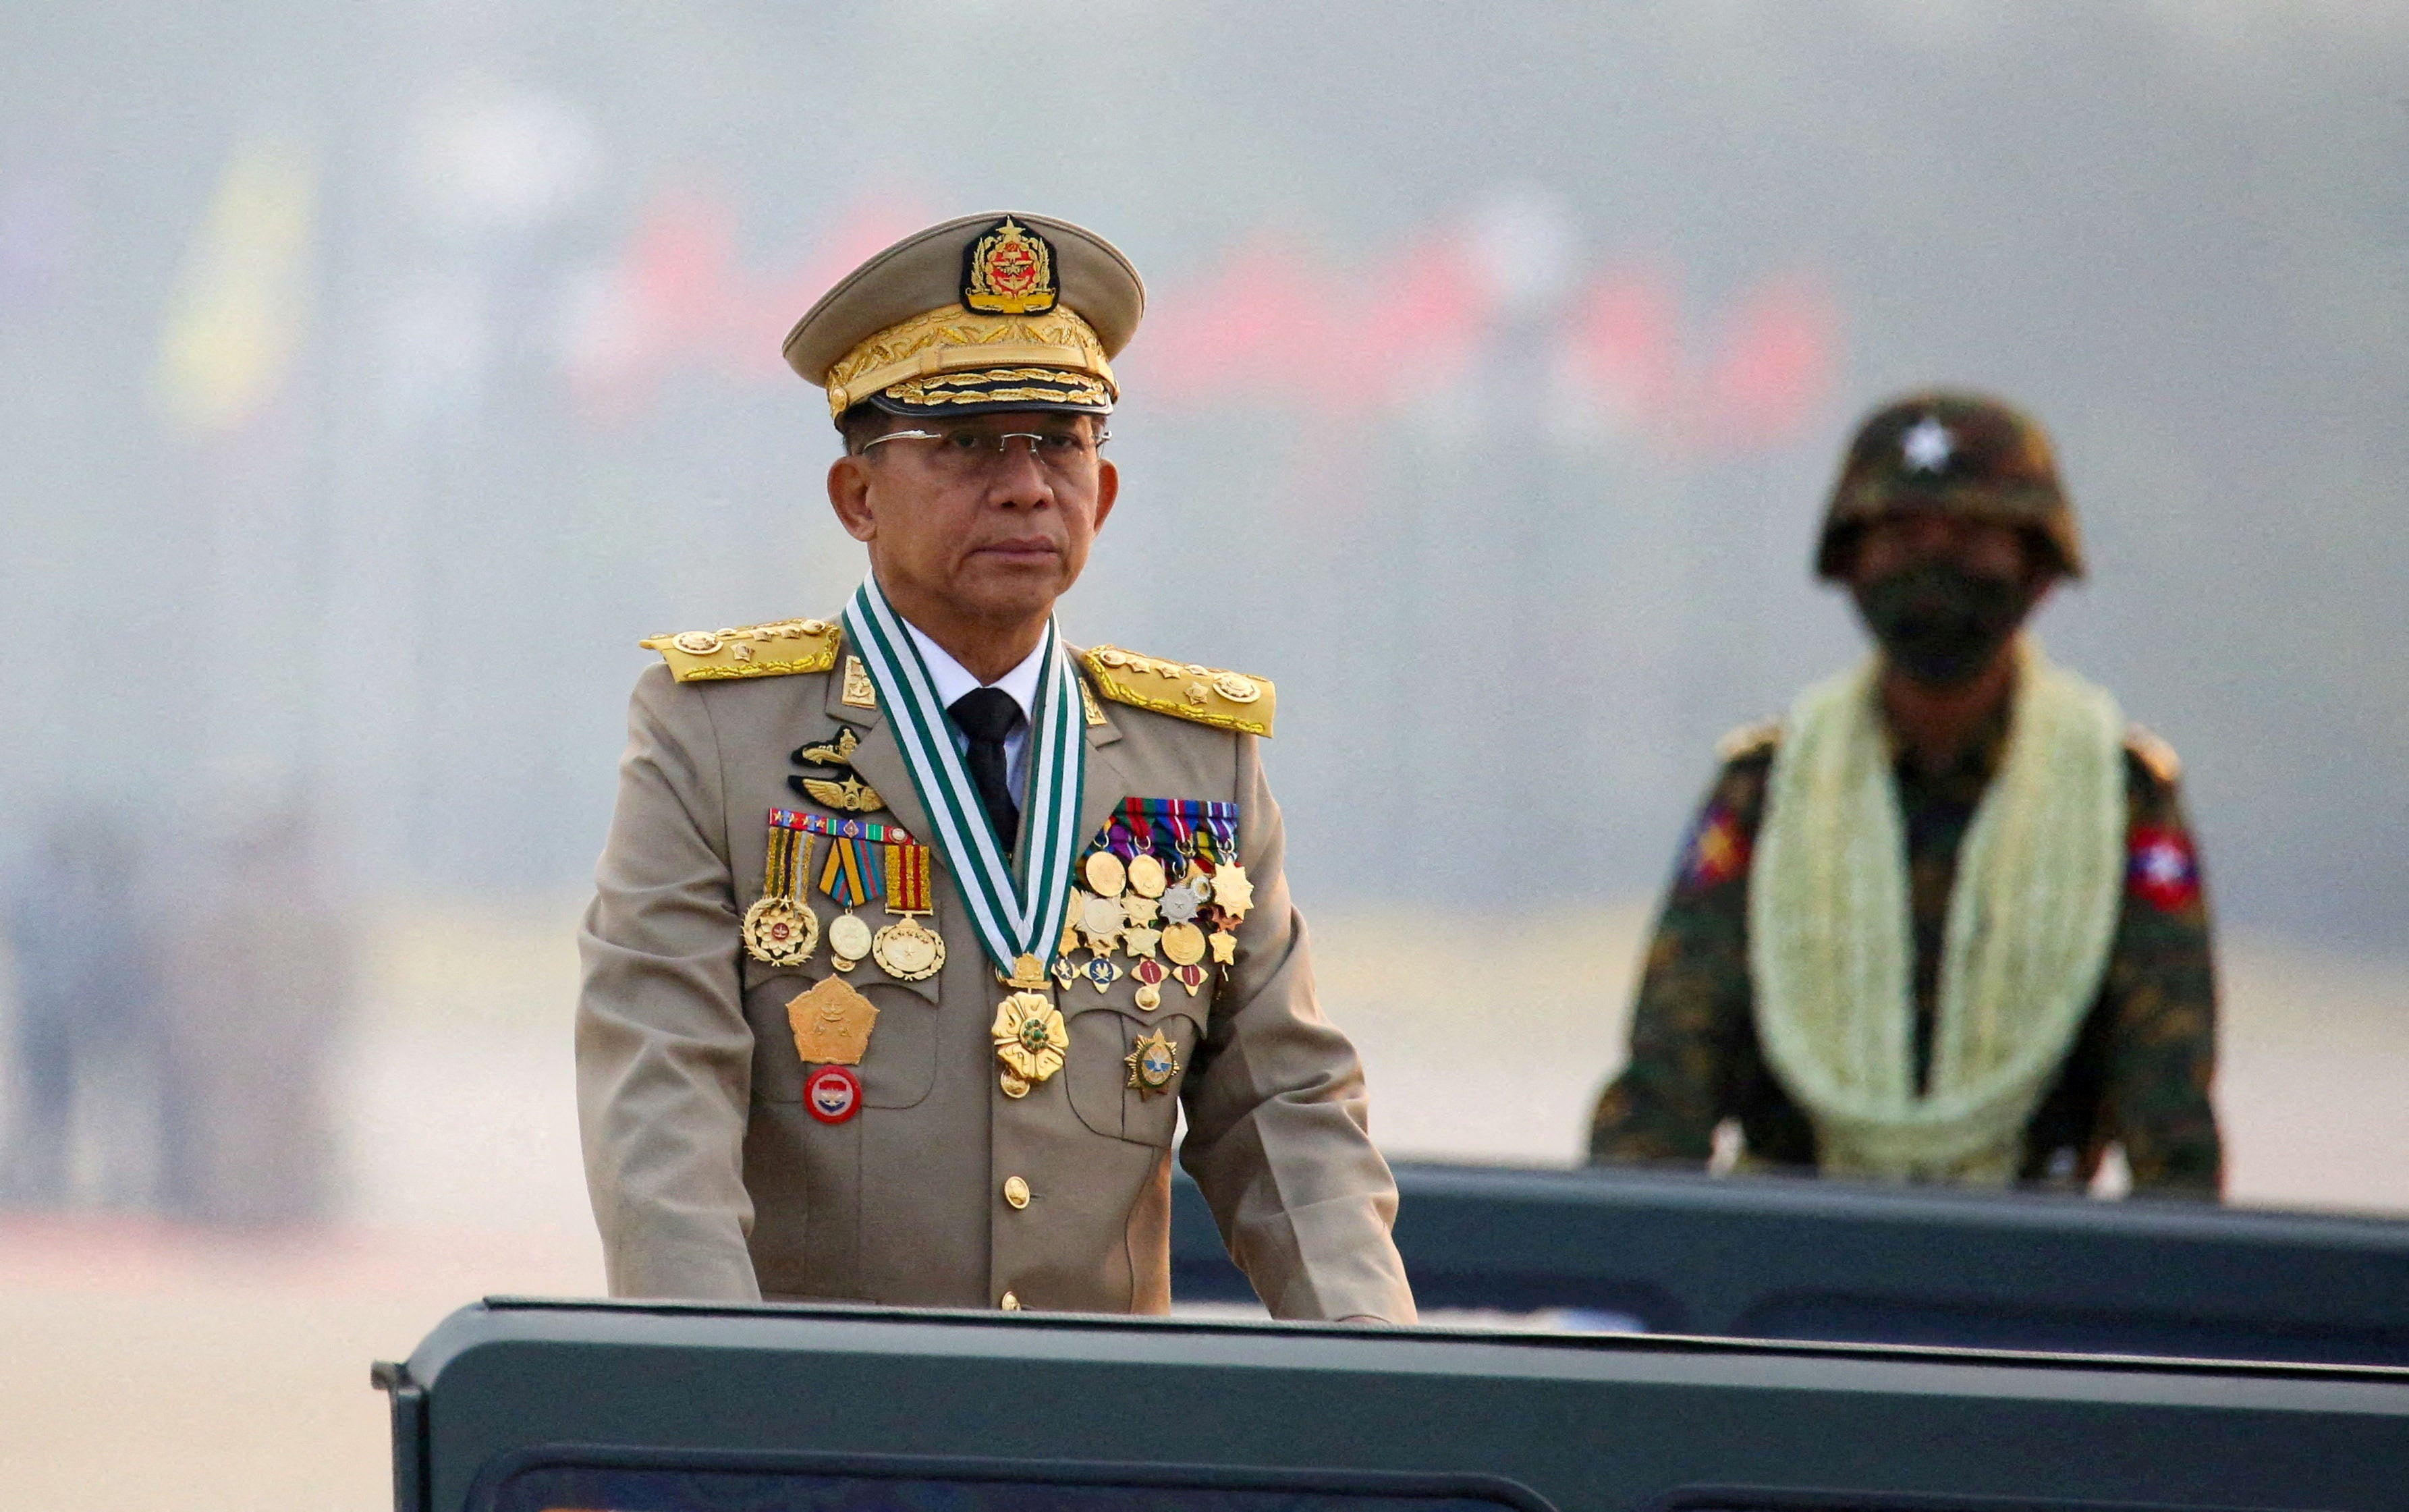 Myanmar's junta chief Senior General Min Aung Hlaing